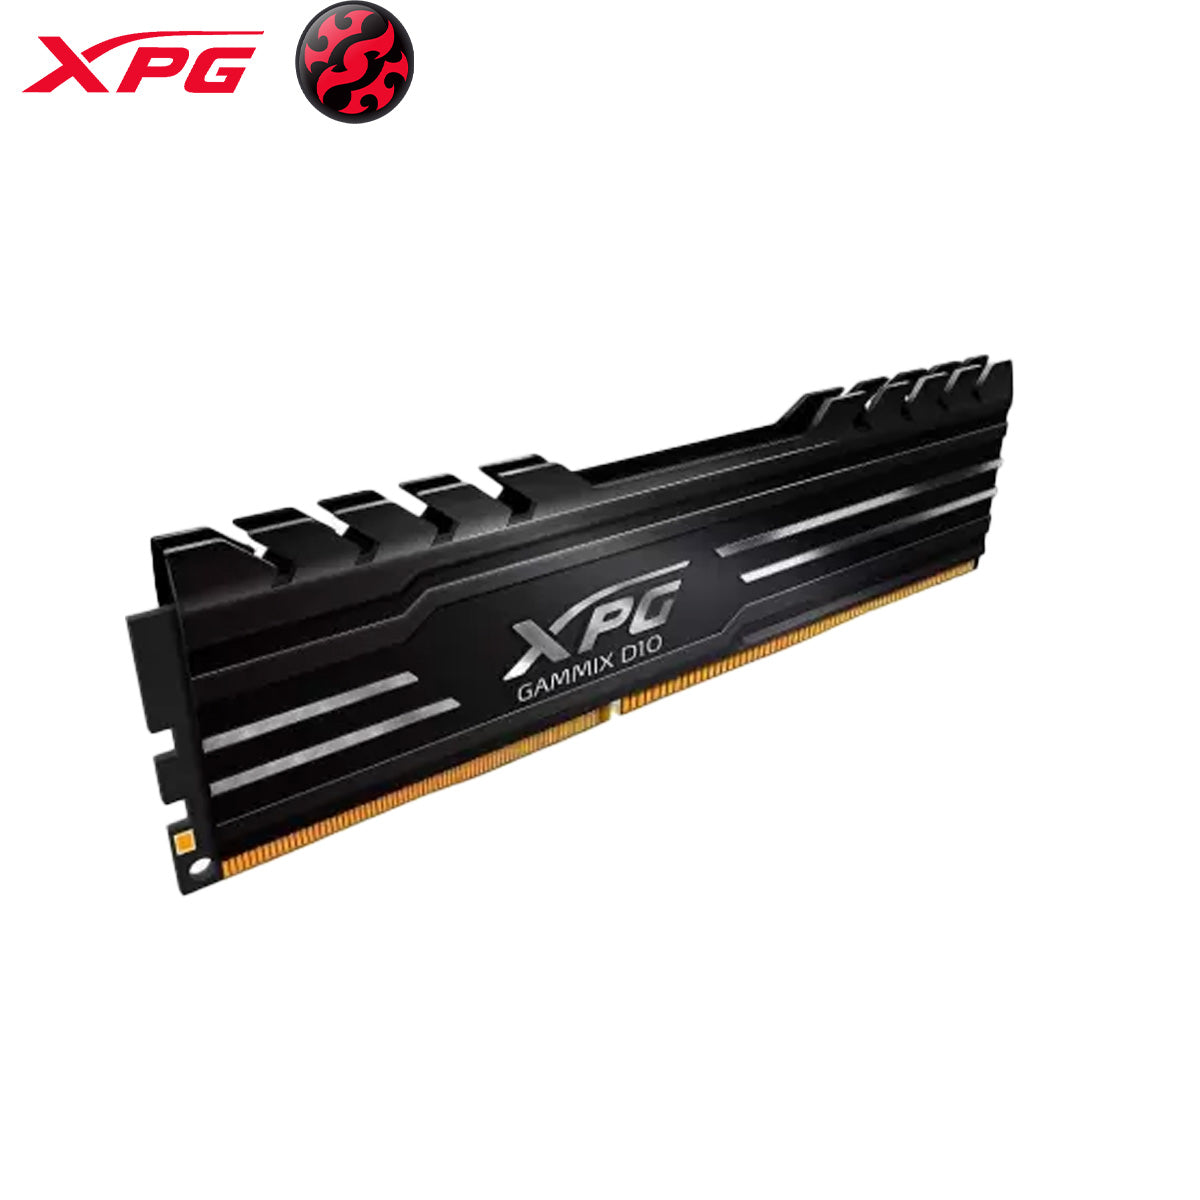 ADATA XPG GAMMIX D10 DDR4 4GB 2666MHAZ Gaming Memory Module